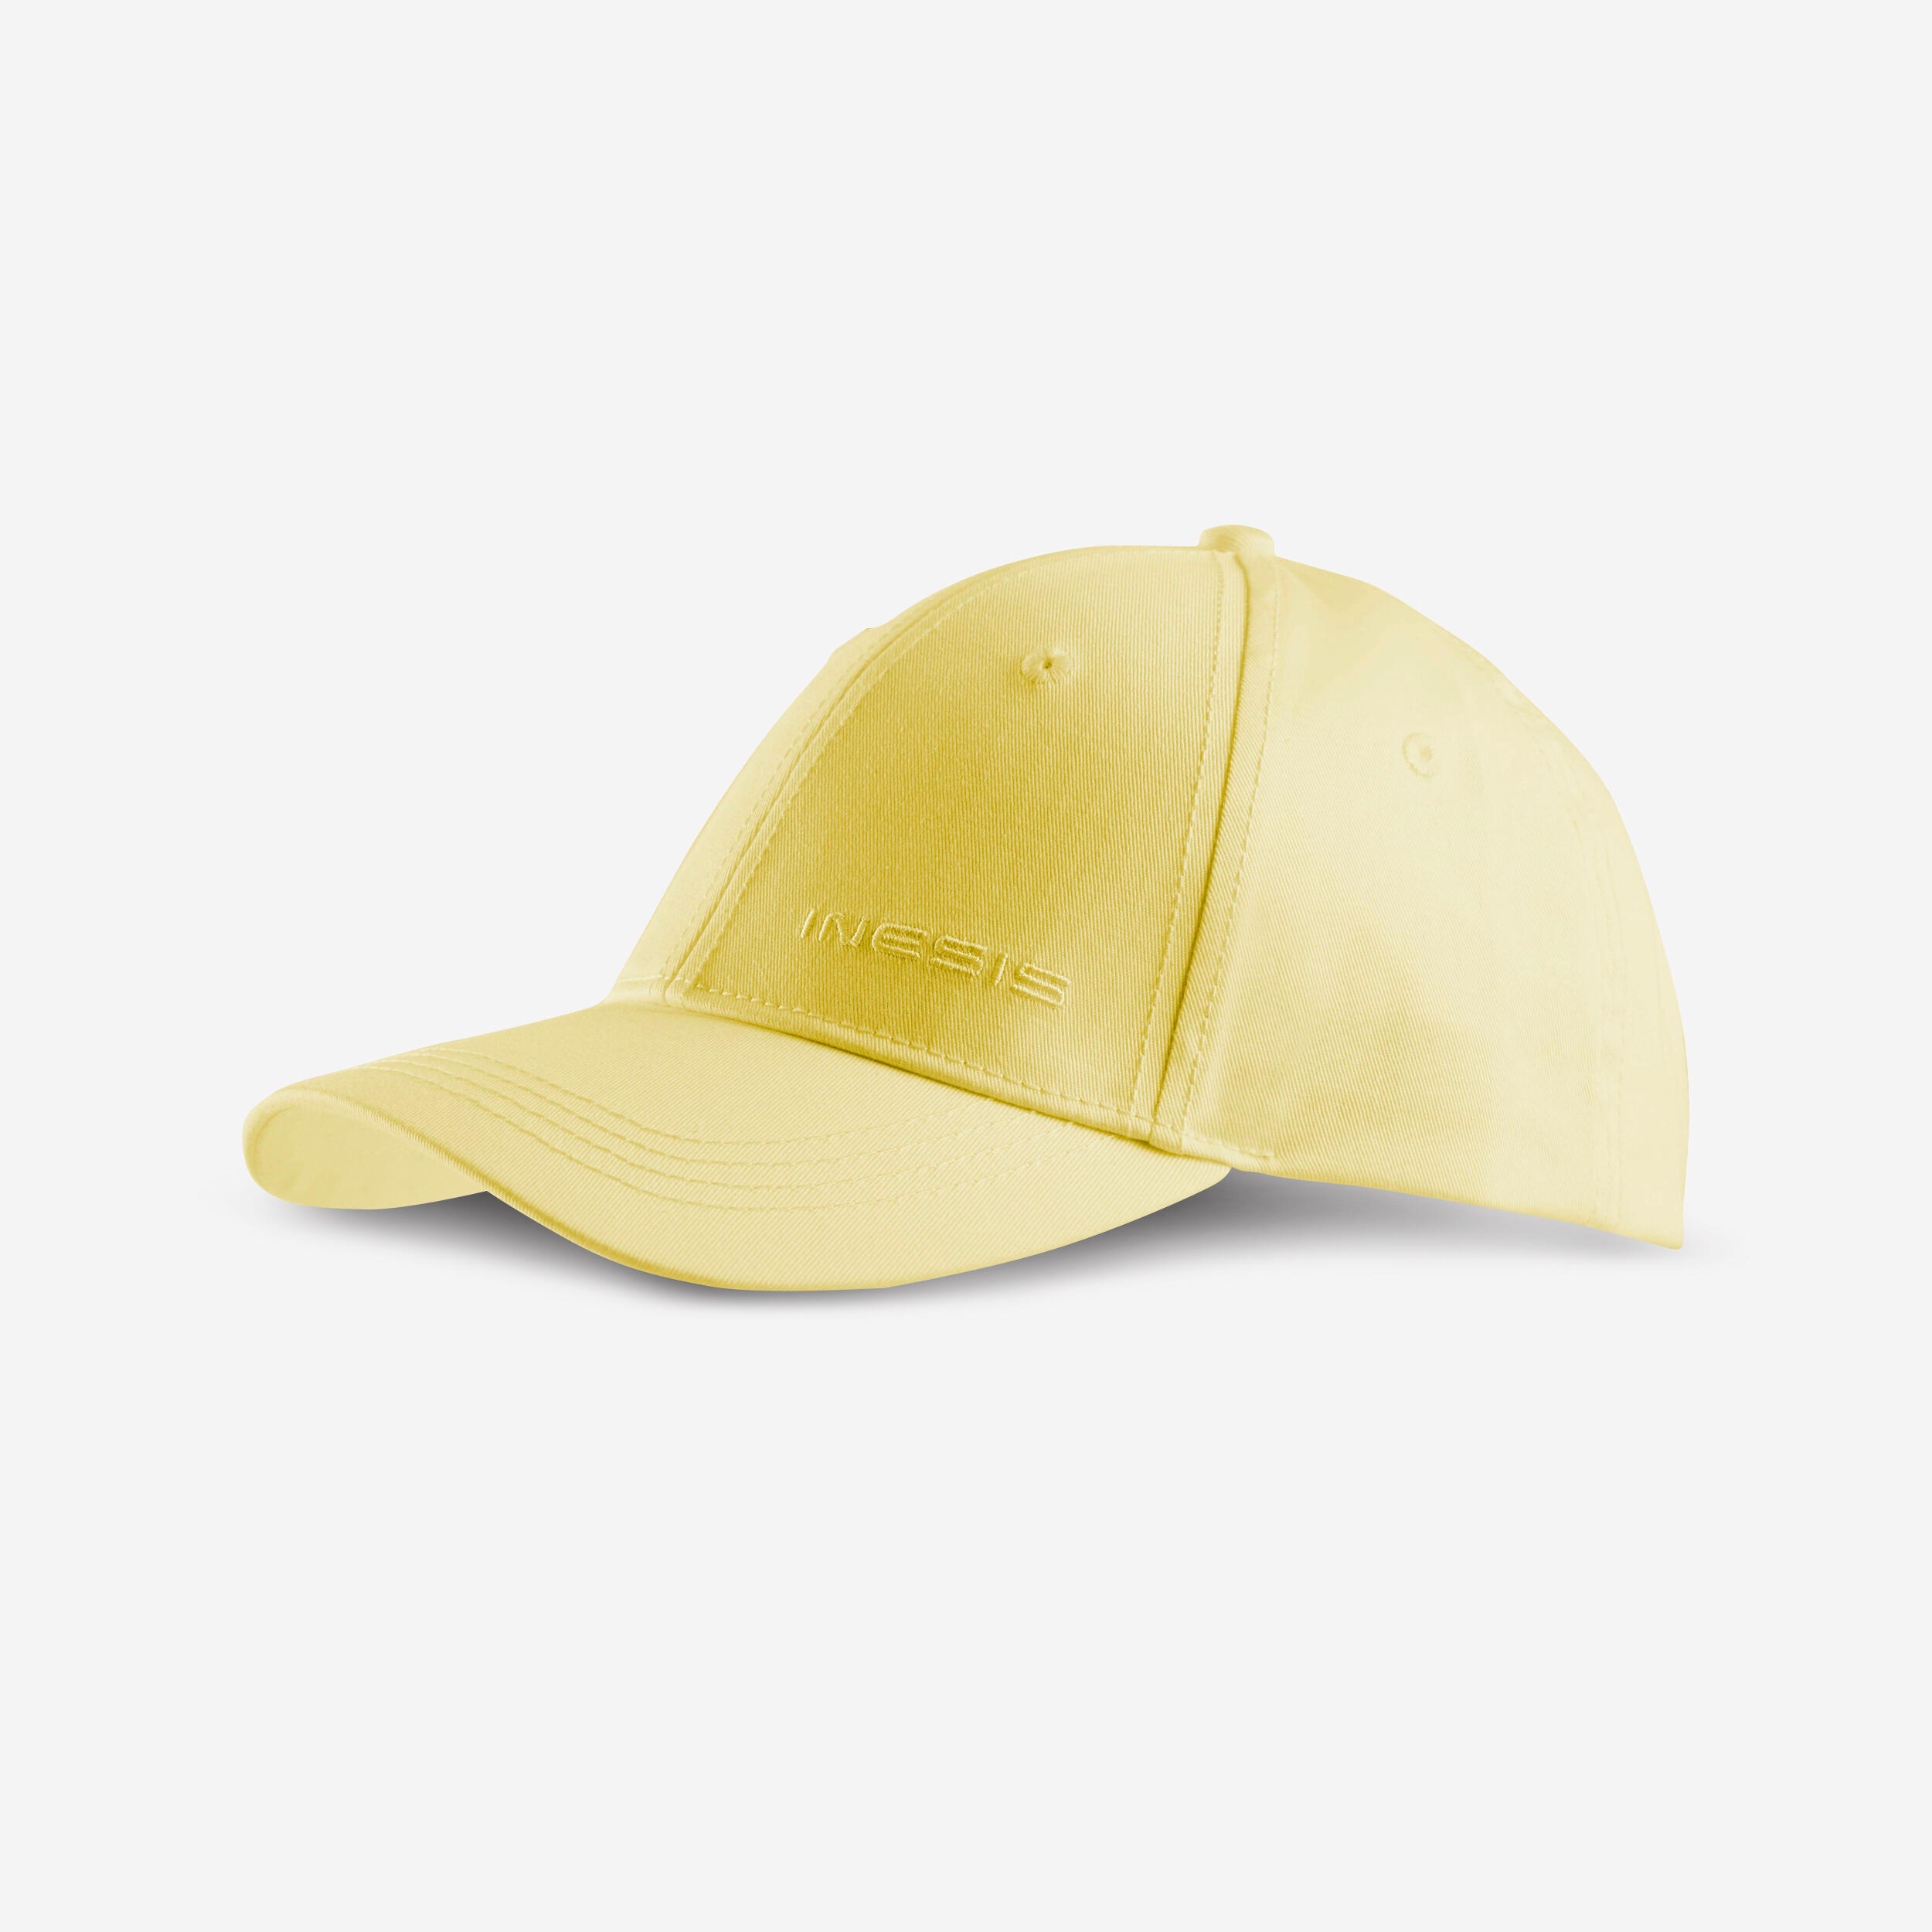 INESIS Adult's golf cap - MW 500 yellow